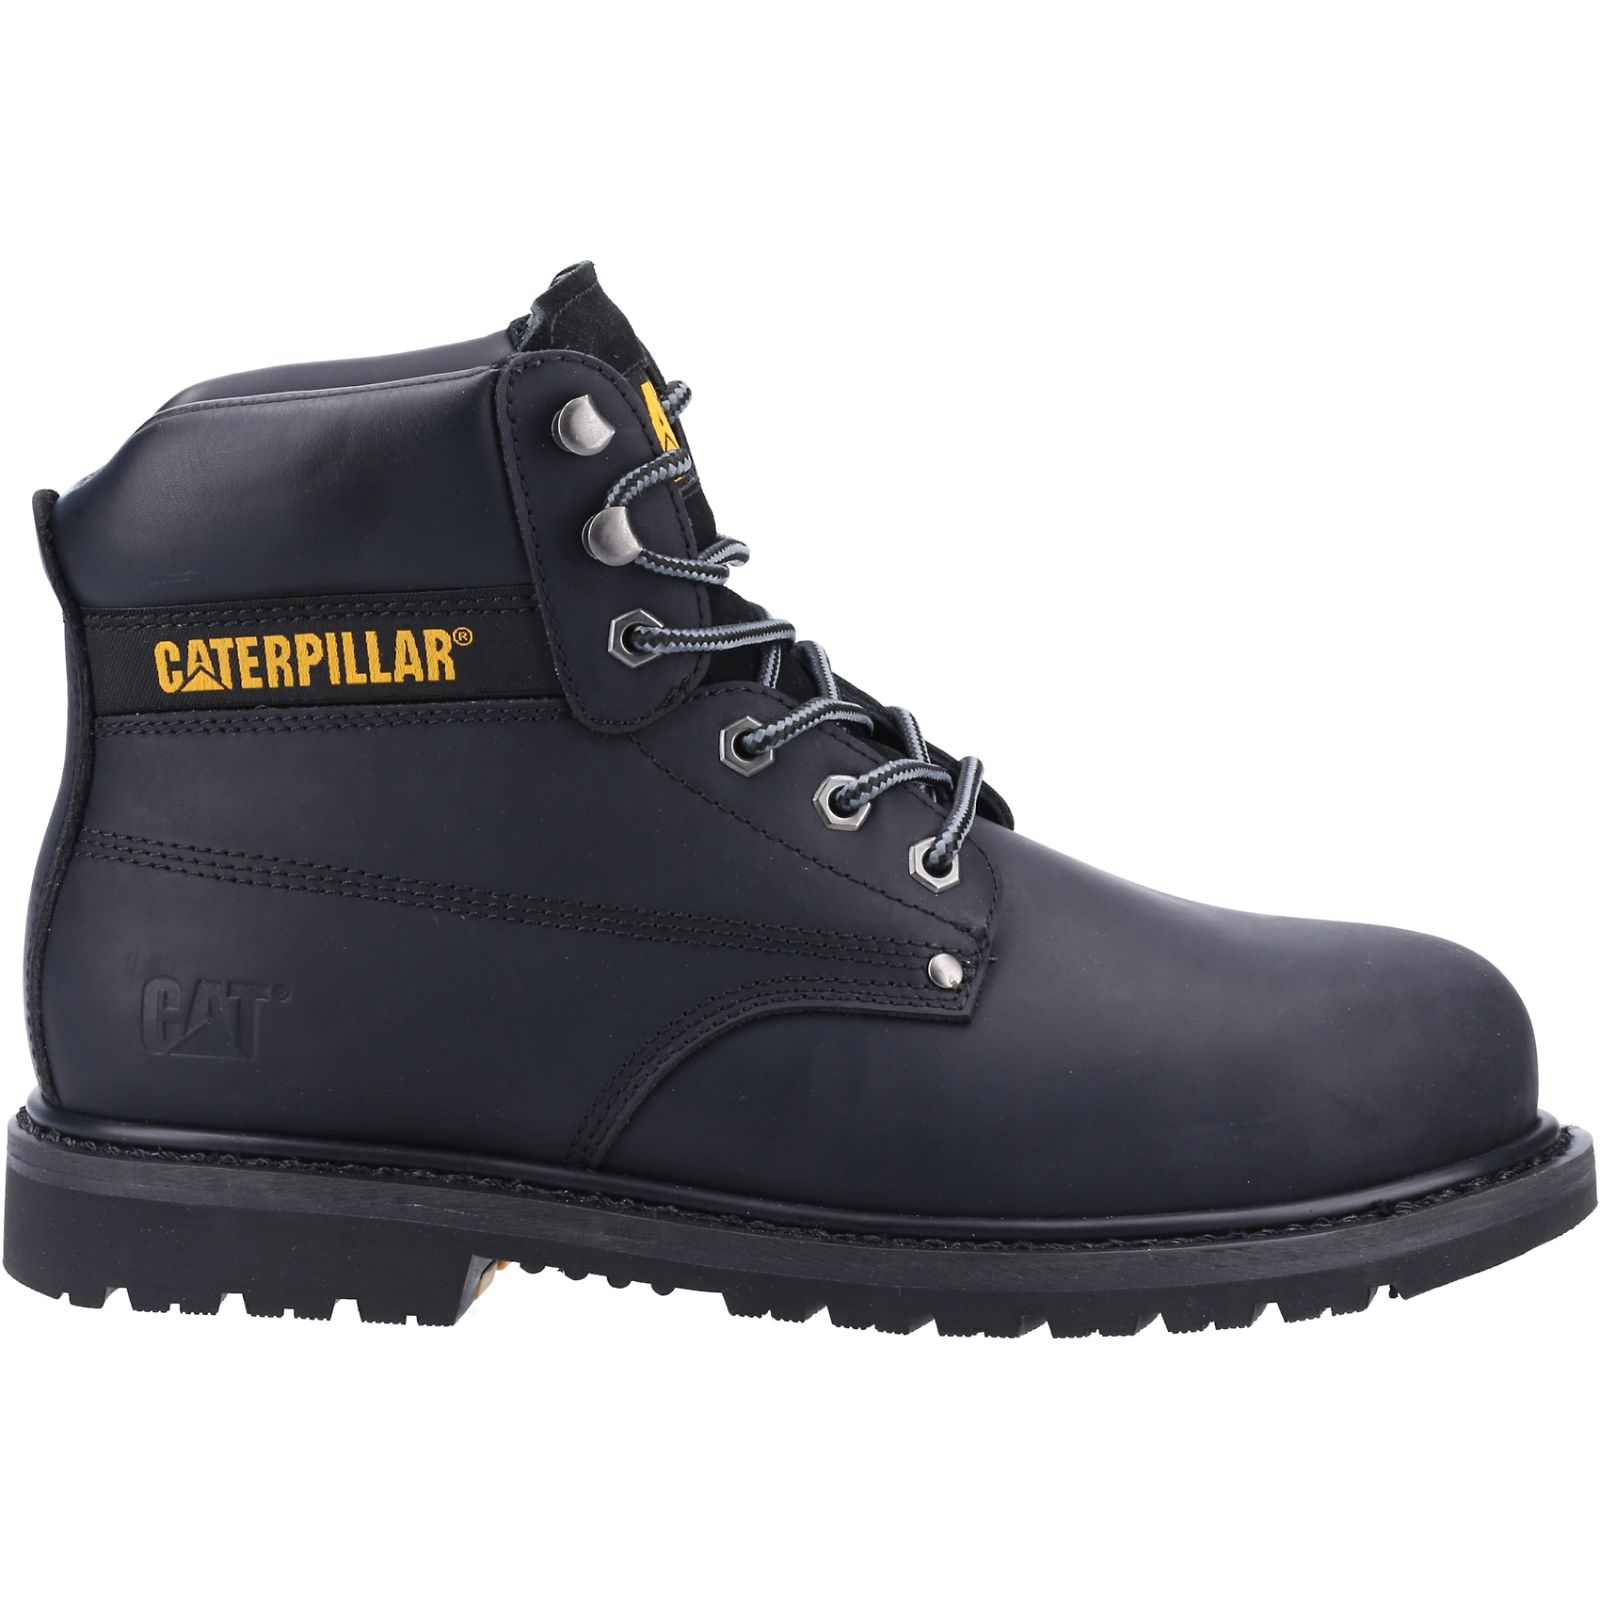 Caterpillar Powerplant St Hro Sra Philippines - Mens Work Boots - Black 50124BWPD